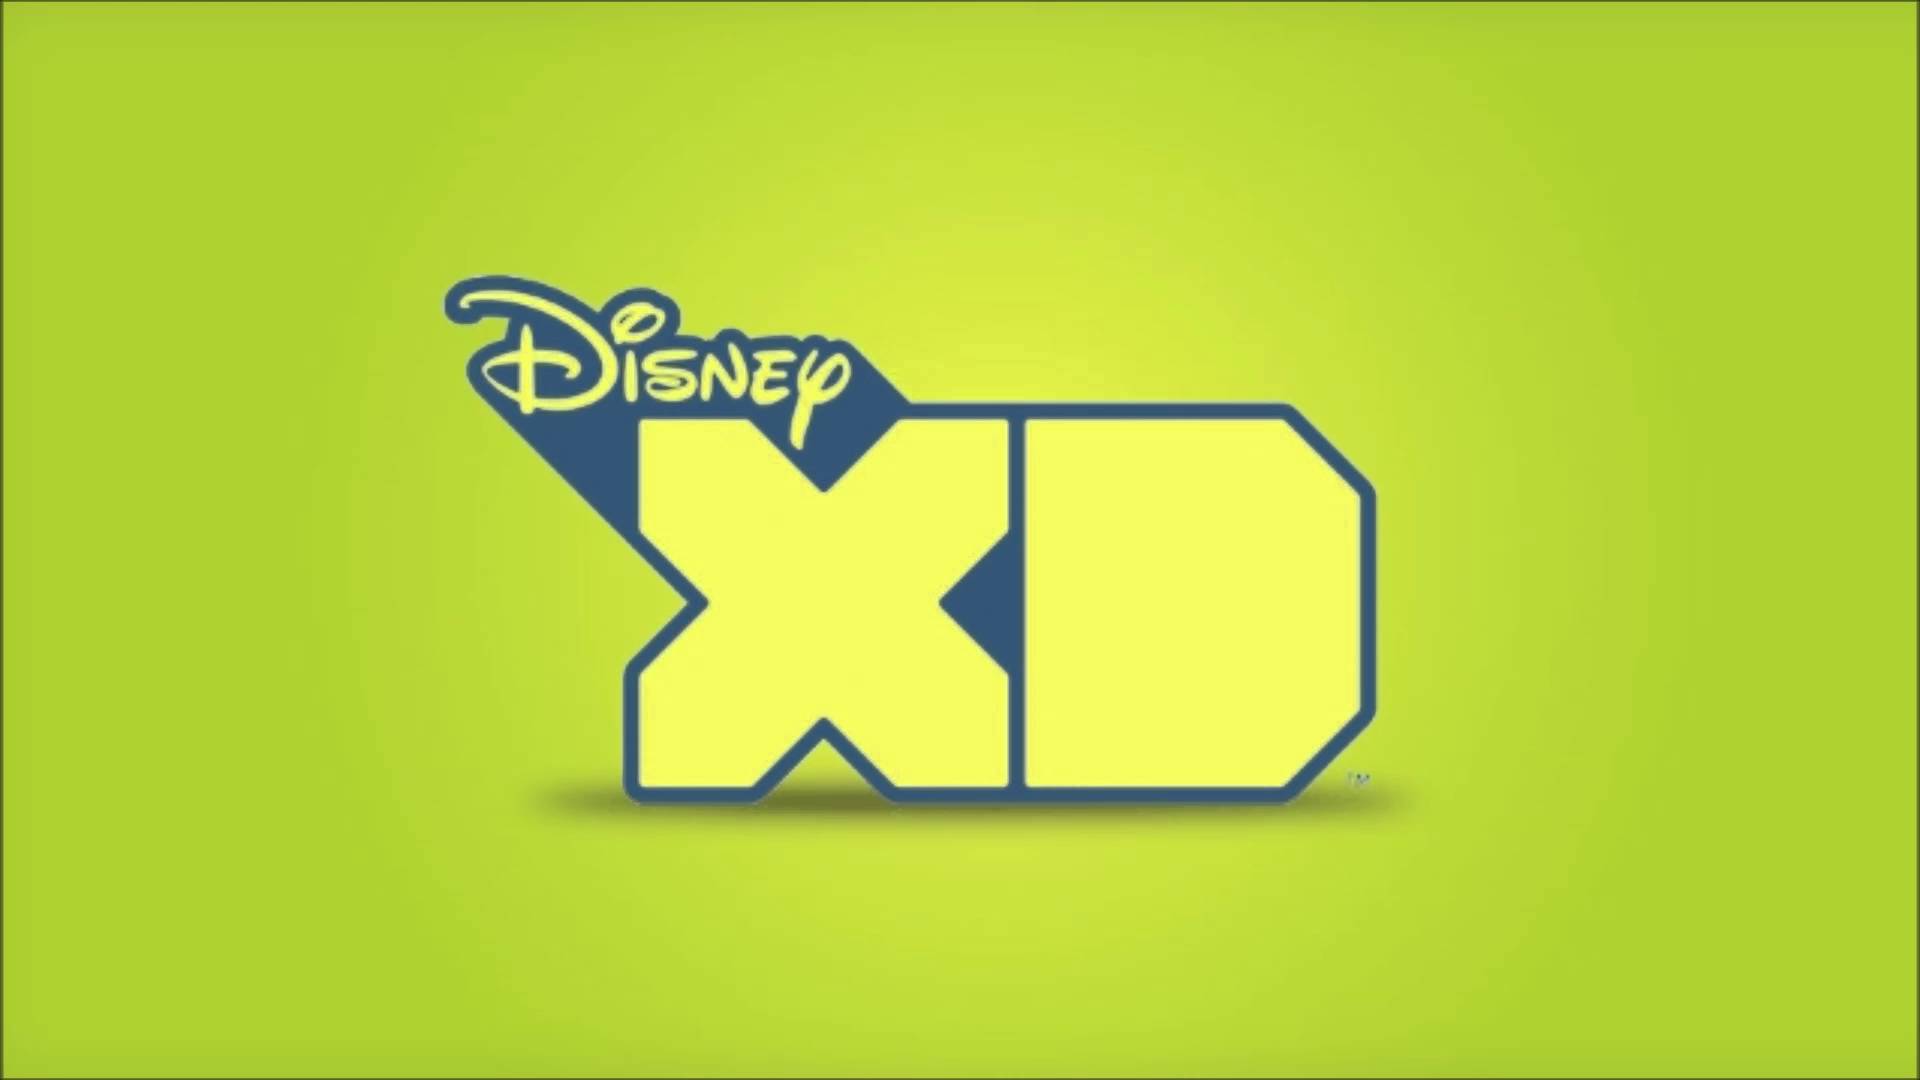 Disney Channel Green Logo - Disney xd Logos